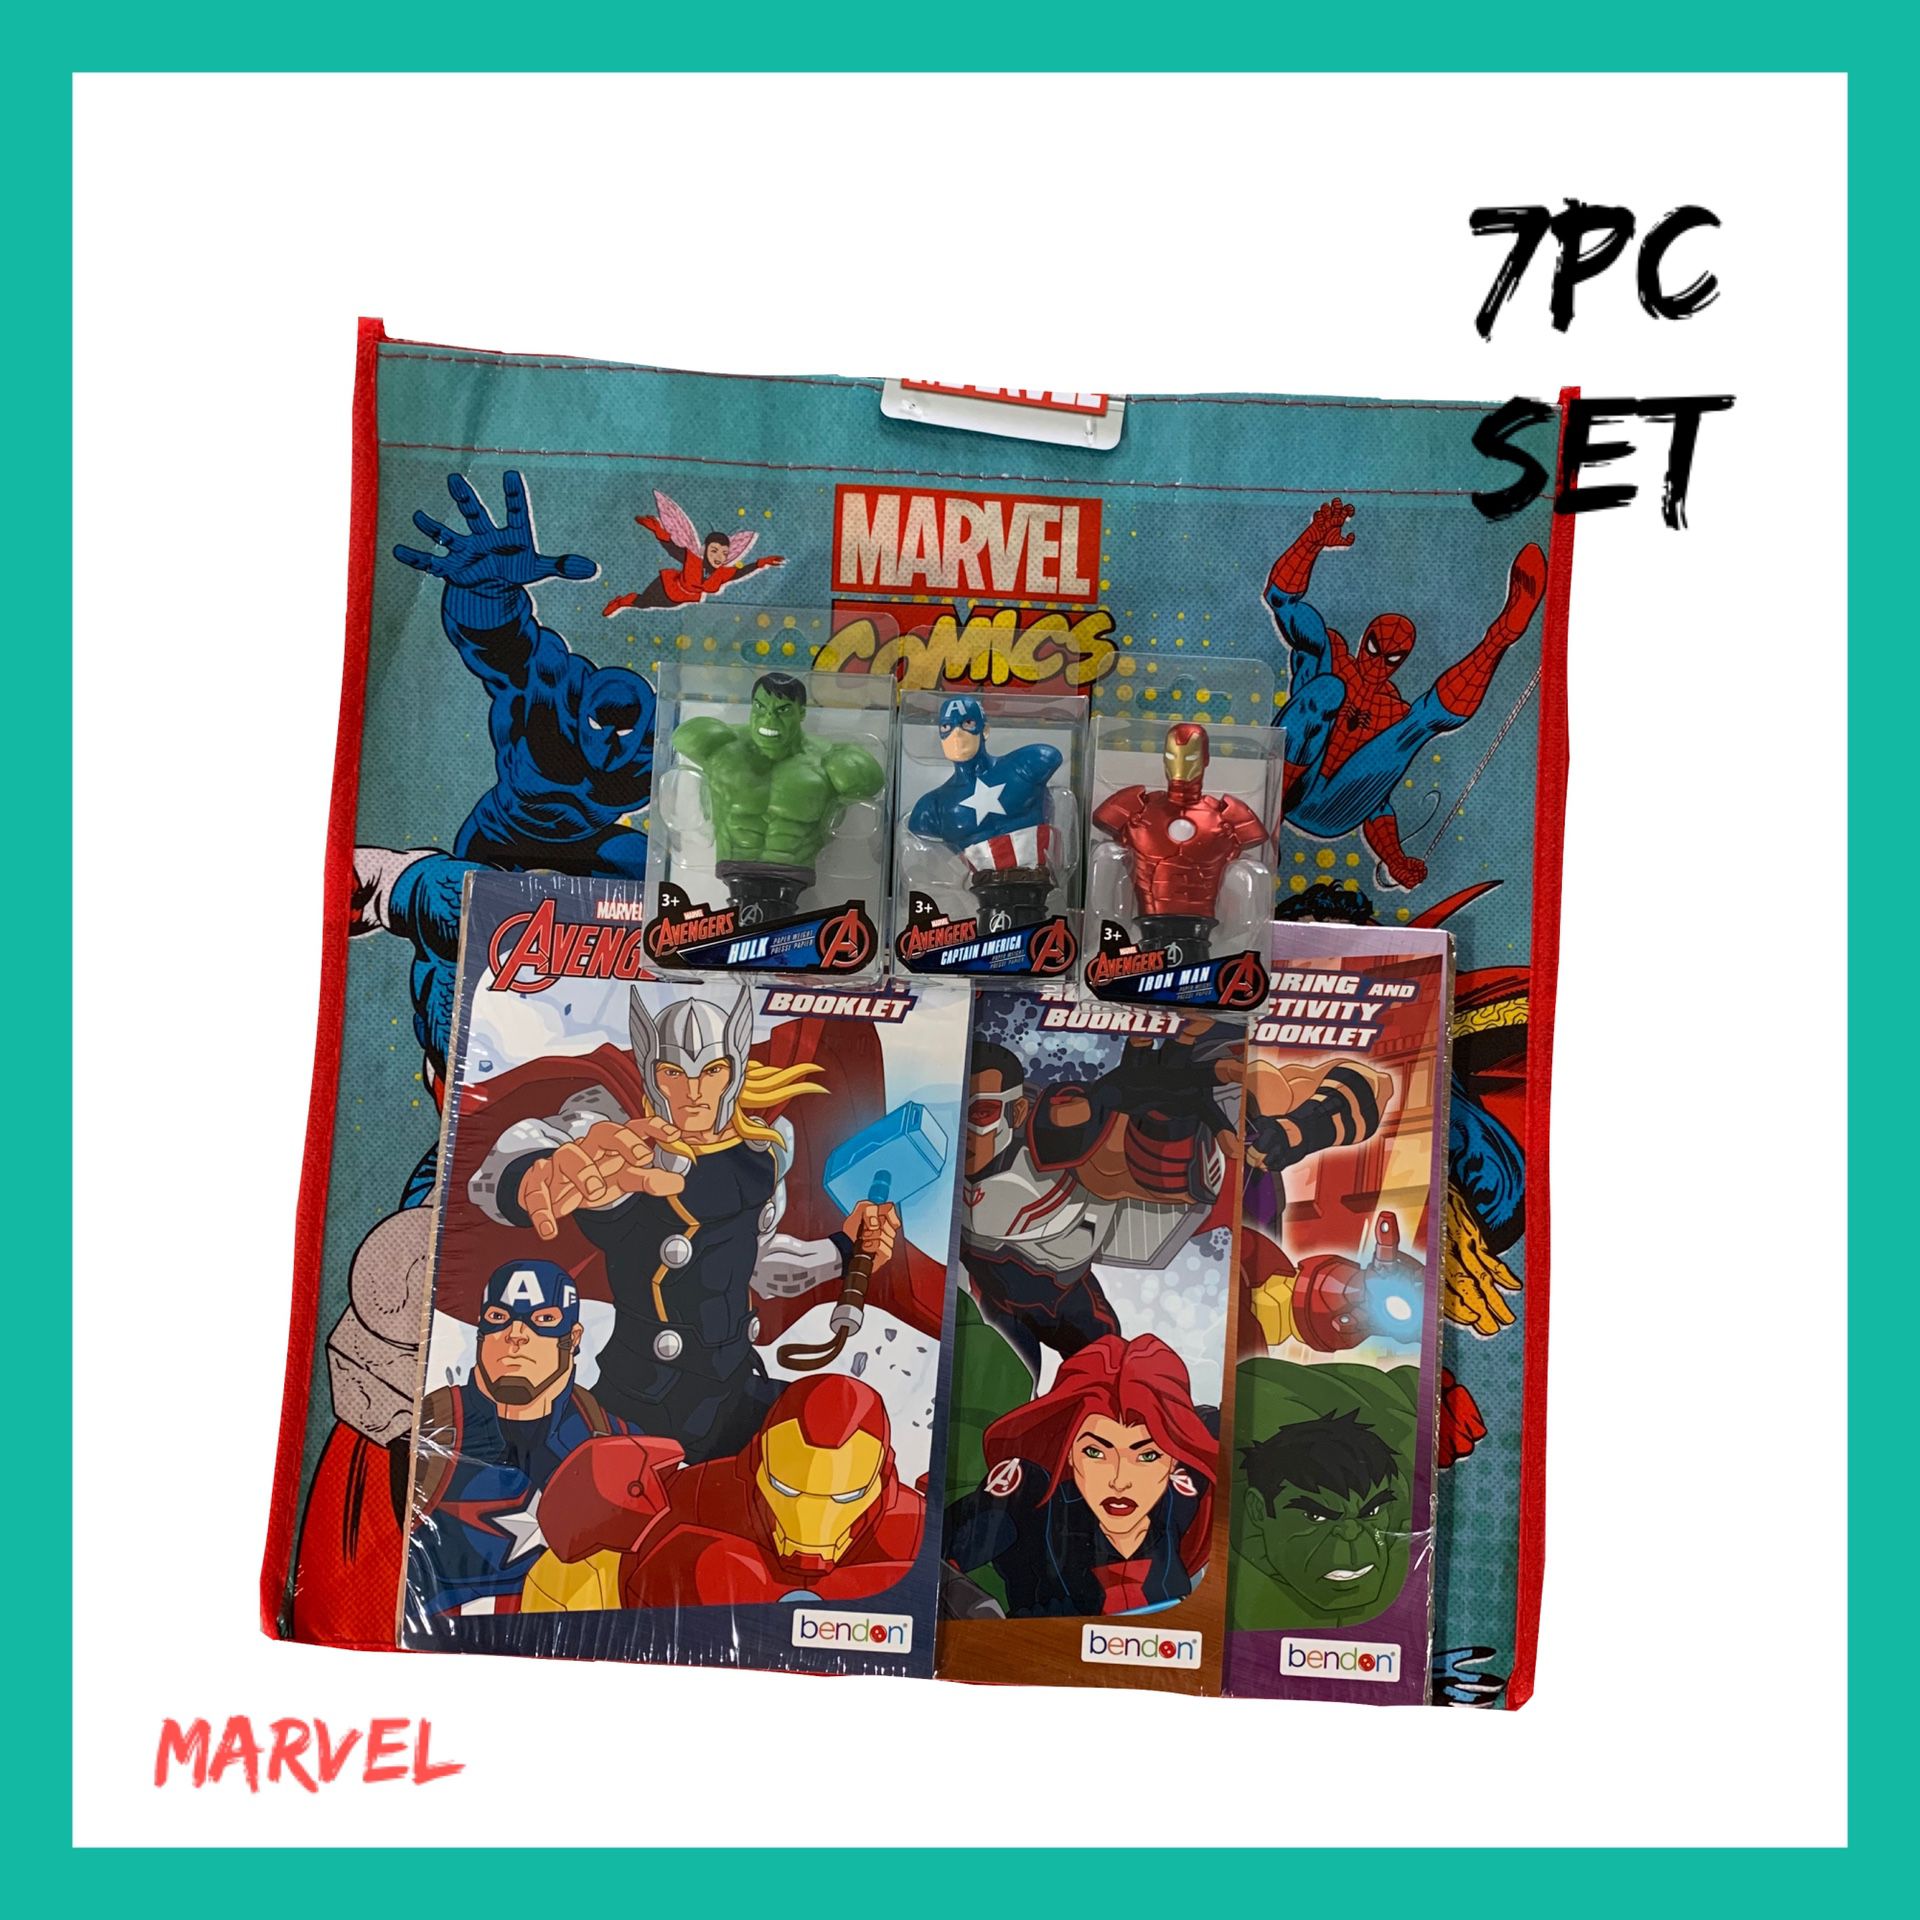 NIB Marvel Avengers 7pc Set